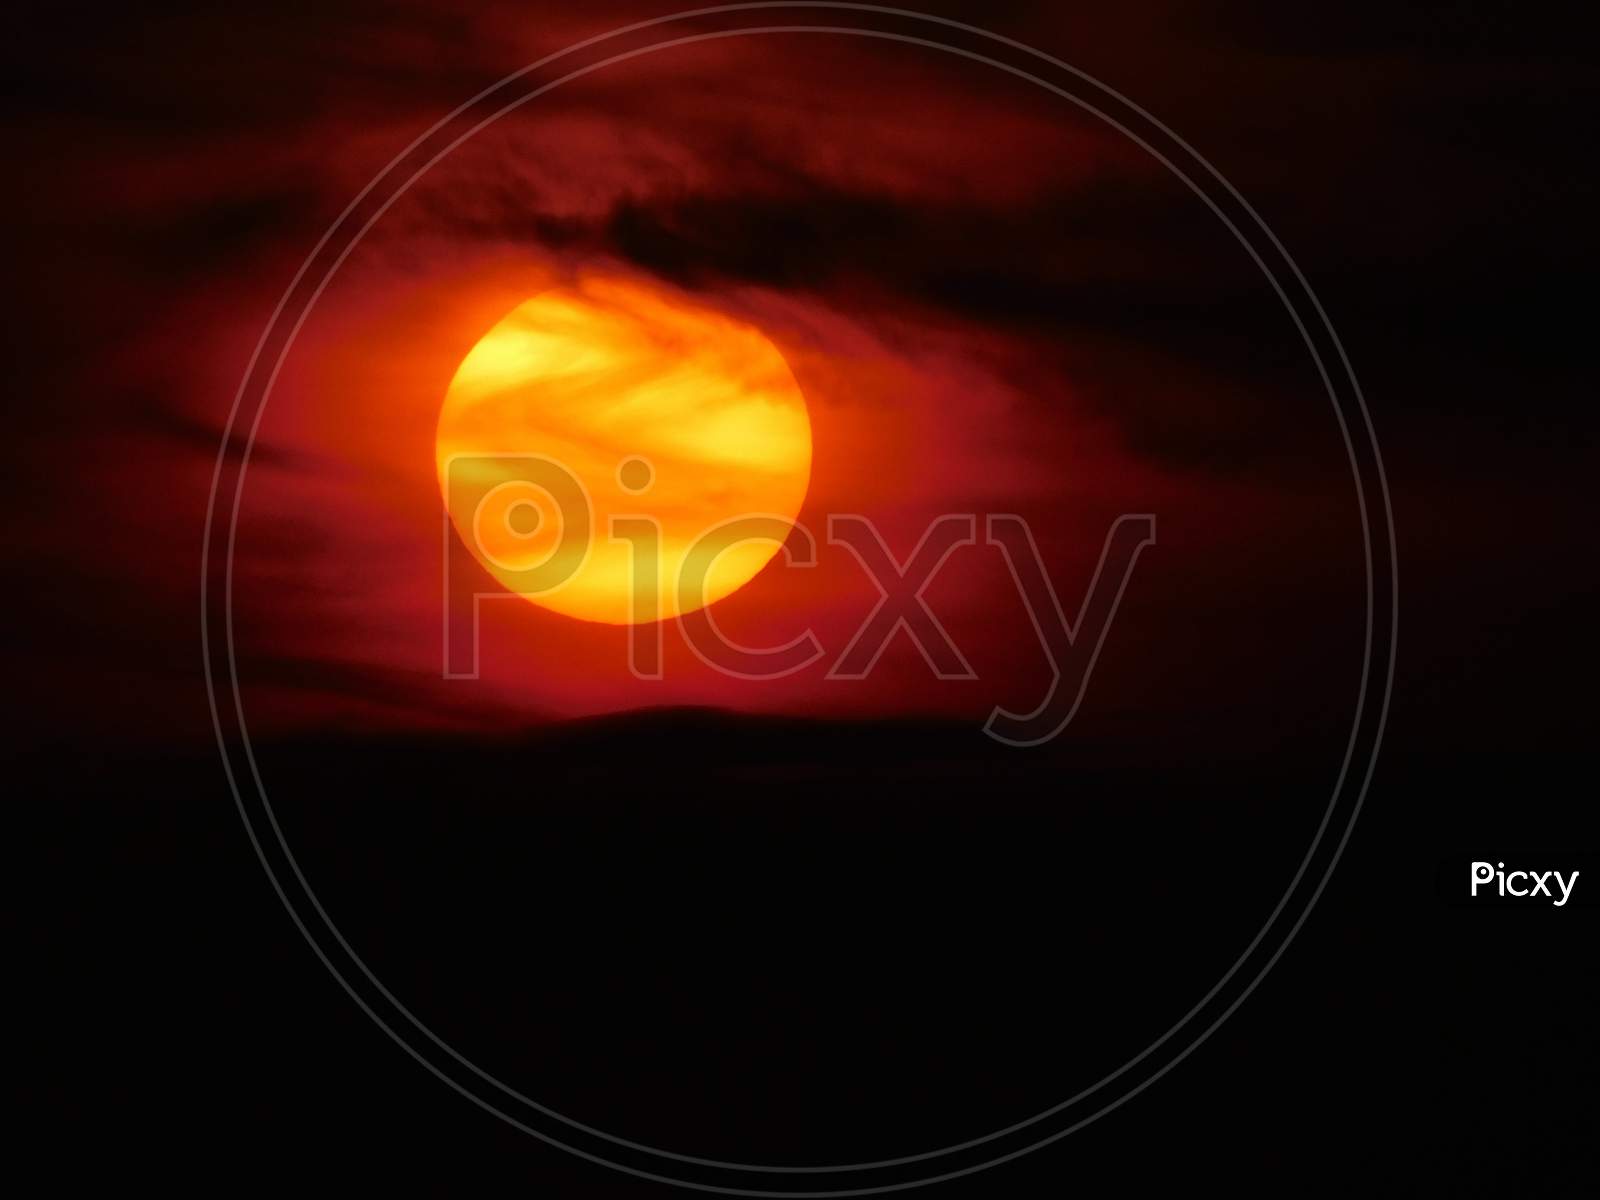 A view of the beautiful orange sun seen through the dark clouds